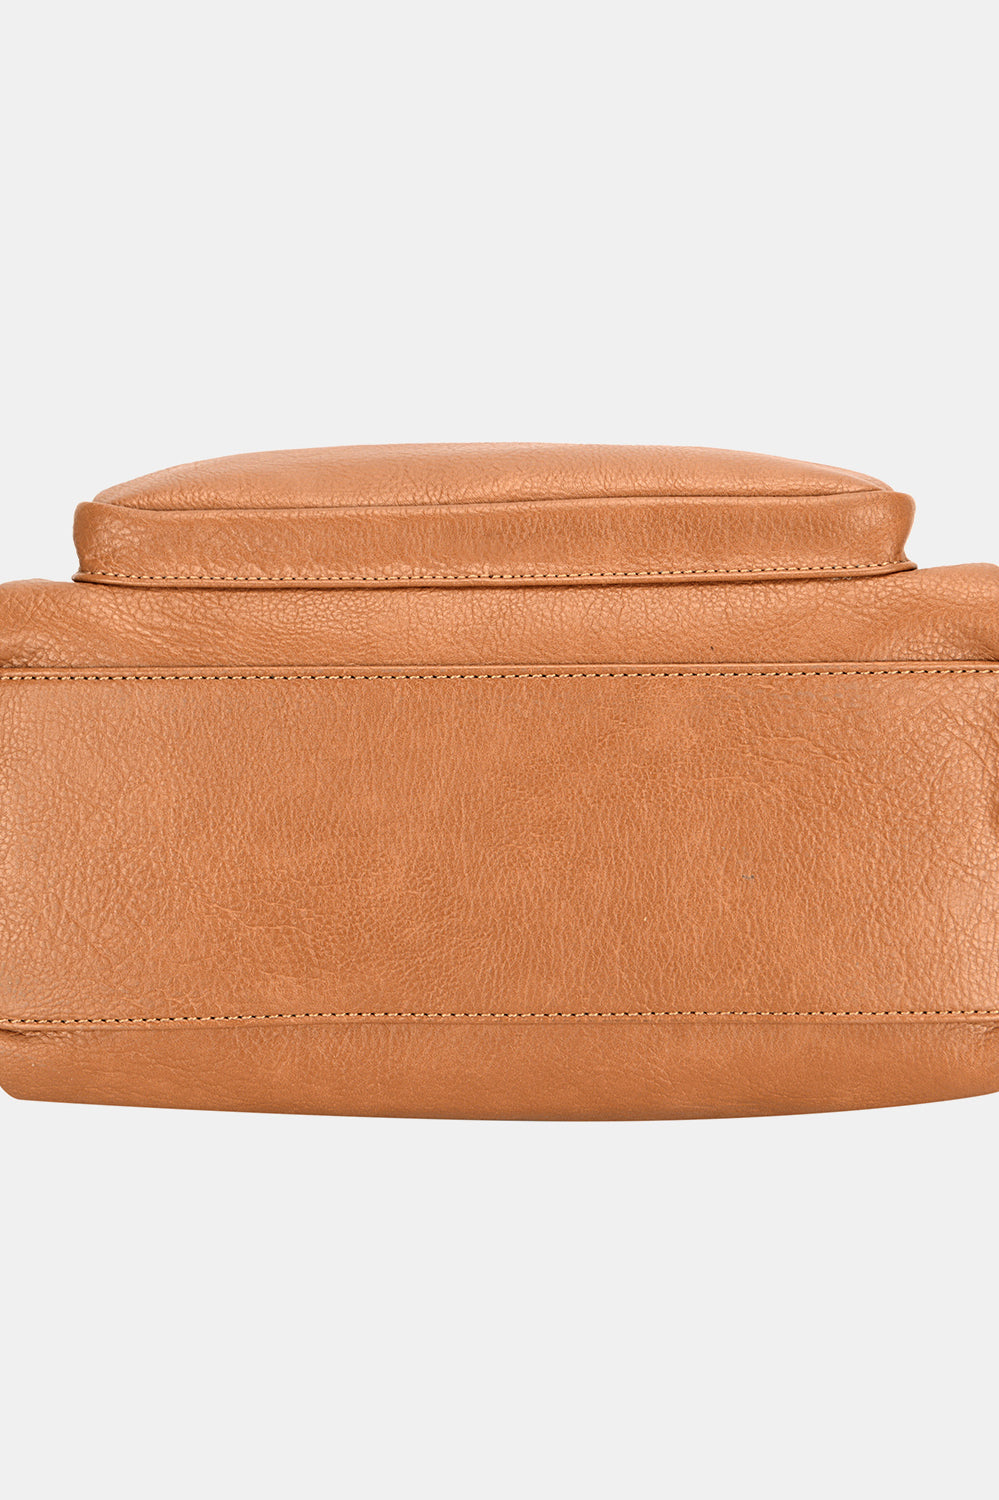 David Jones Zipper PU Leather Handbag Trendsi